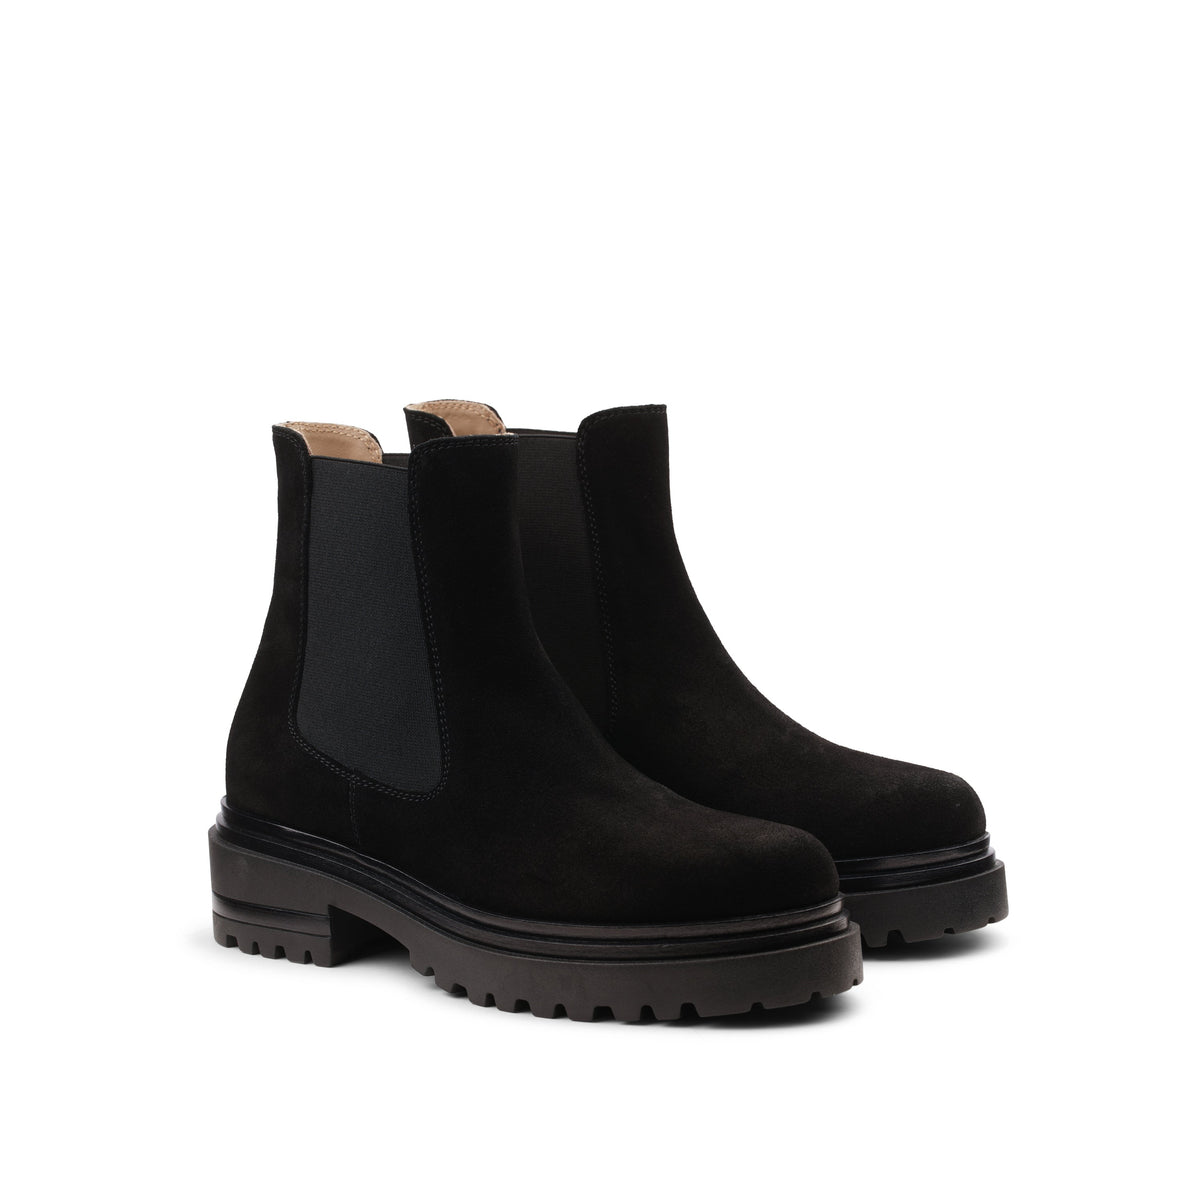 Waterproof Federica Boots